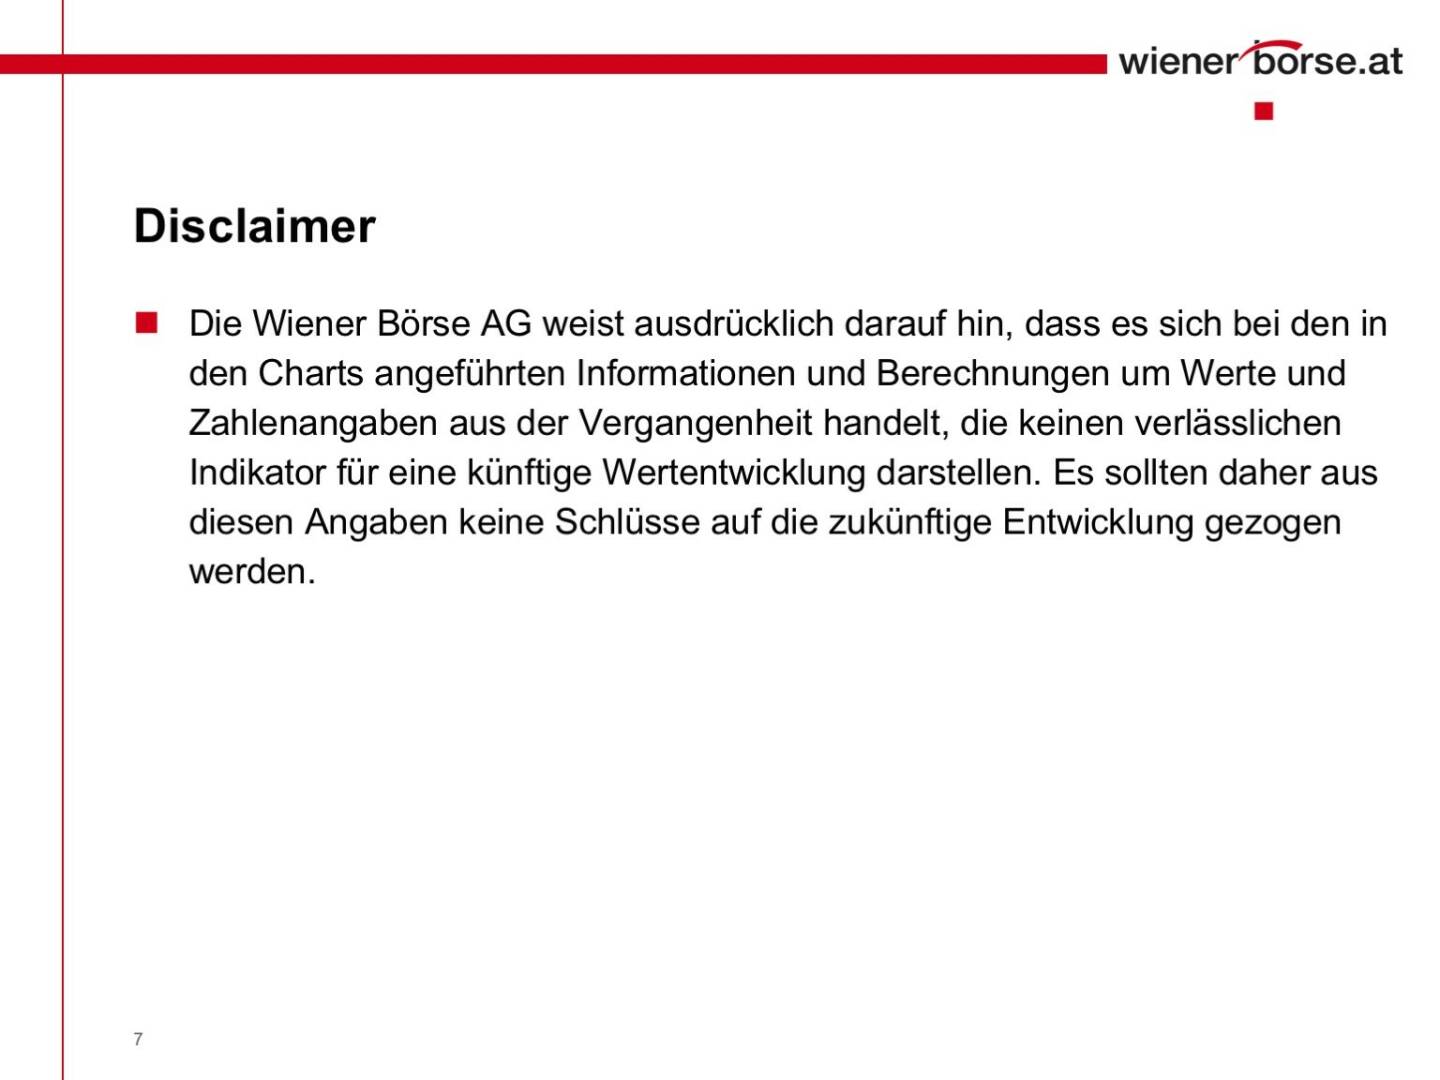 Wiener Börse - Disclaimer